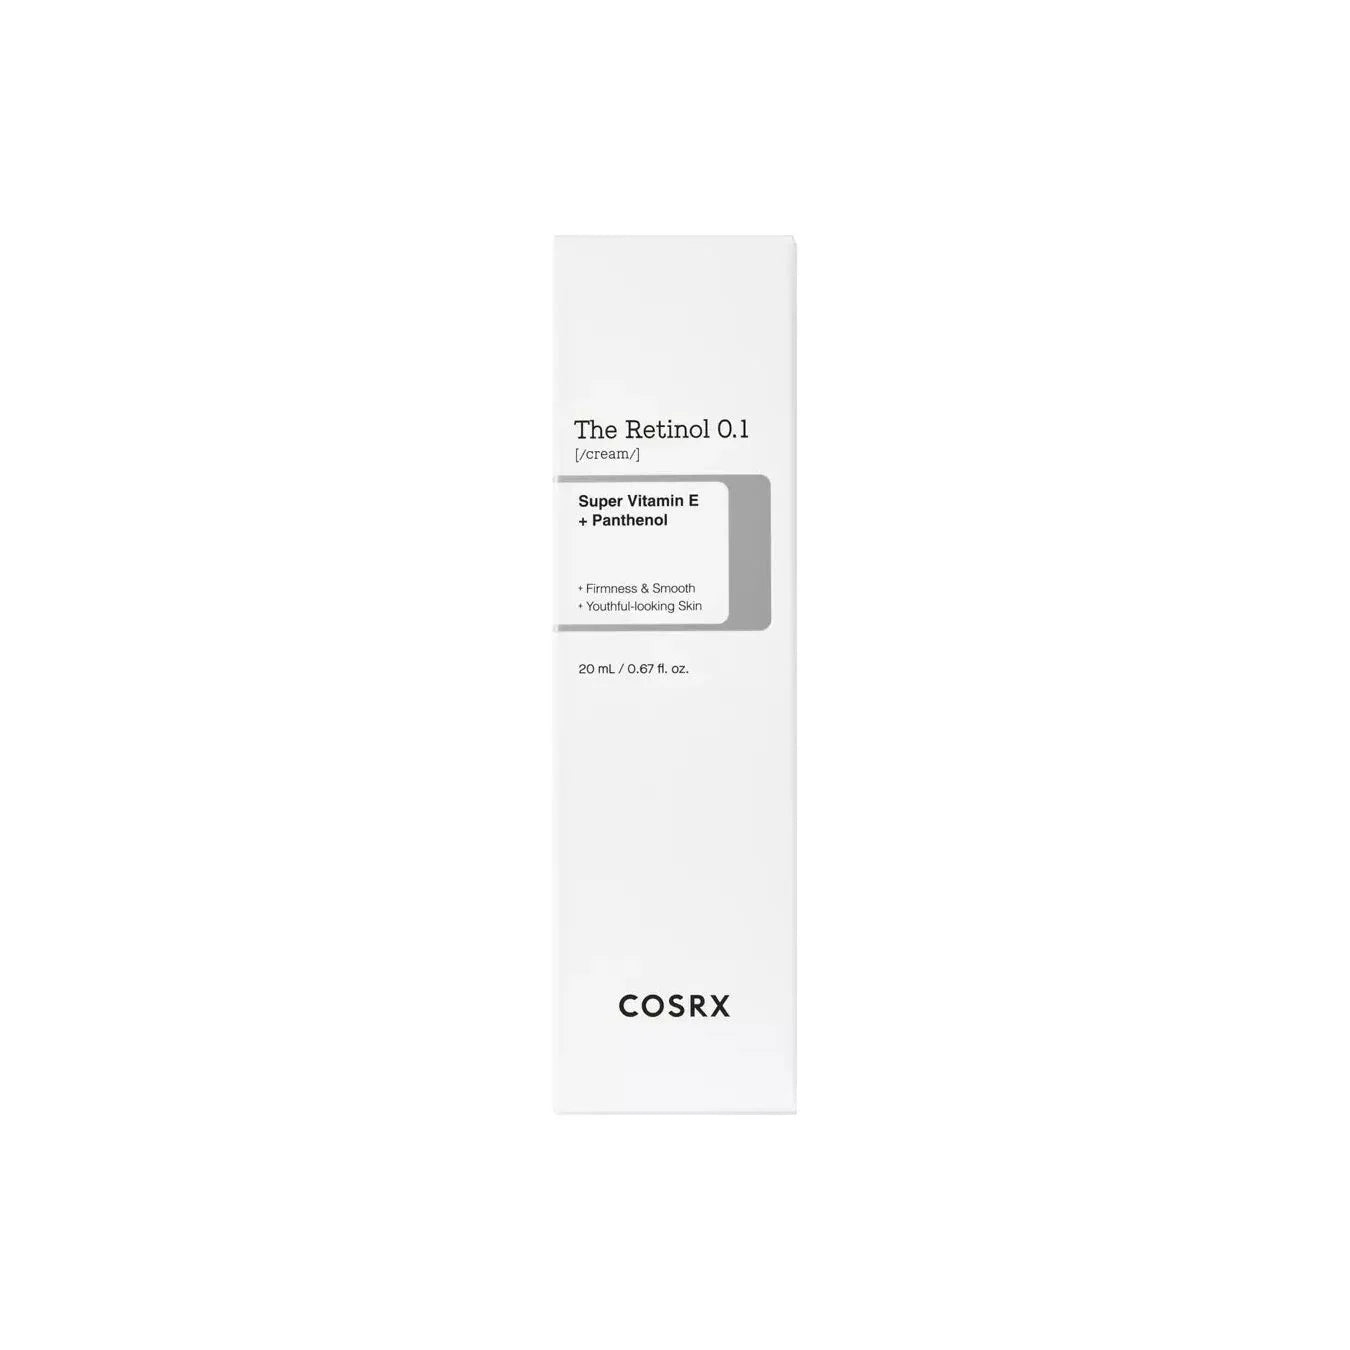 Cosrx The Retinol 0.1 Cream retinol tretinoin alternative for easily irritated sensitive skin gentle anti-aging acne treatment skin care solution K Beauty World 